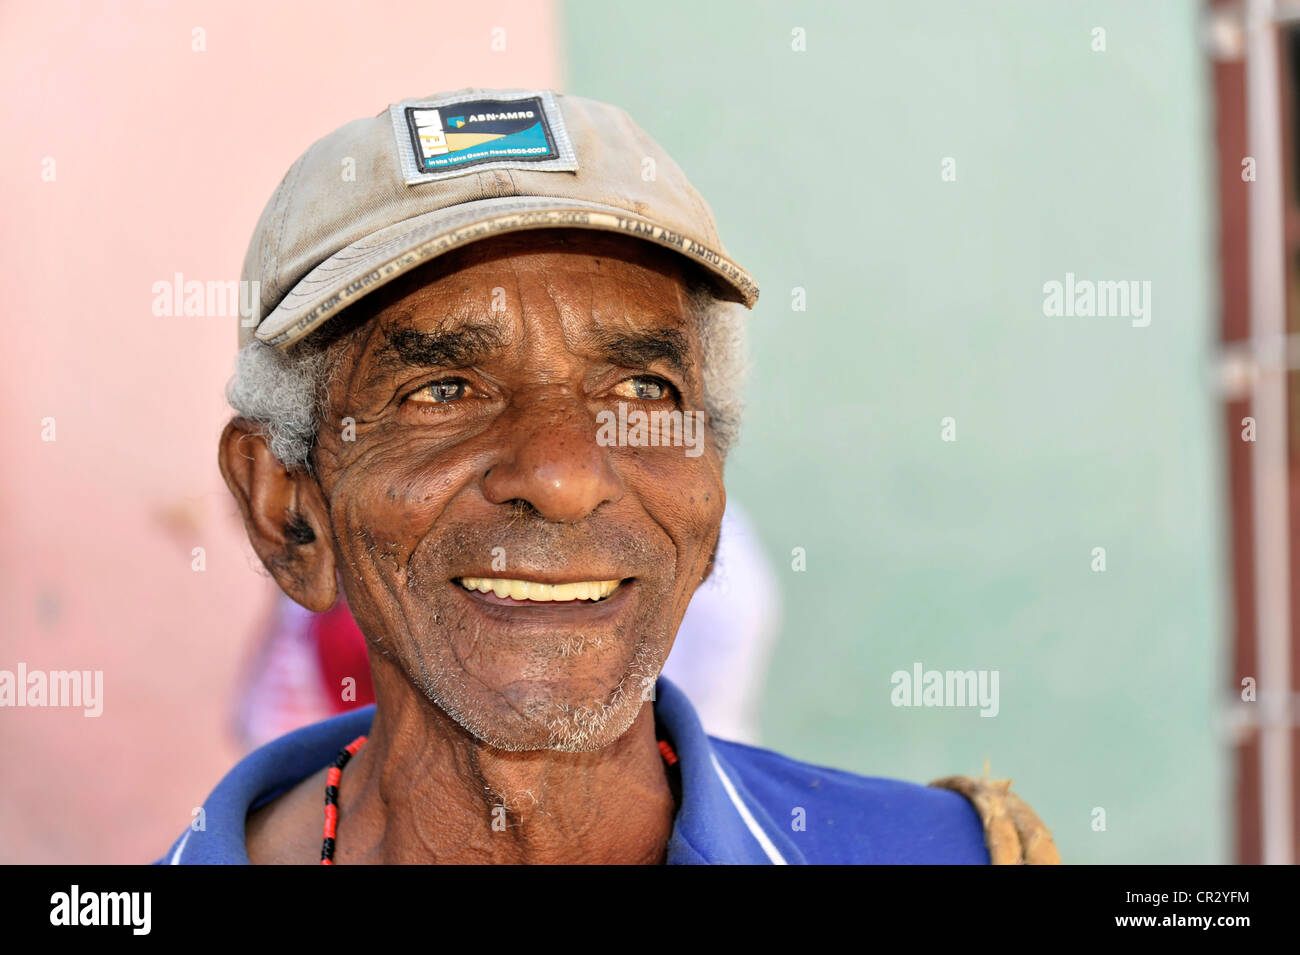 Cuban man, portrait, Trinidad, Cuba, Greater Antilles, Caribbean, Central America, America Stock Photo